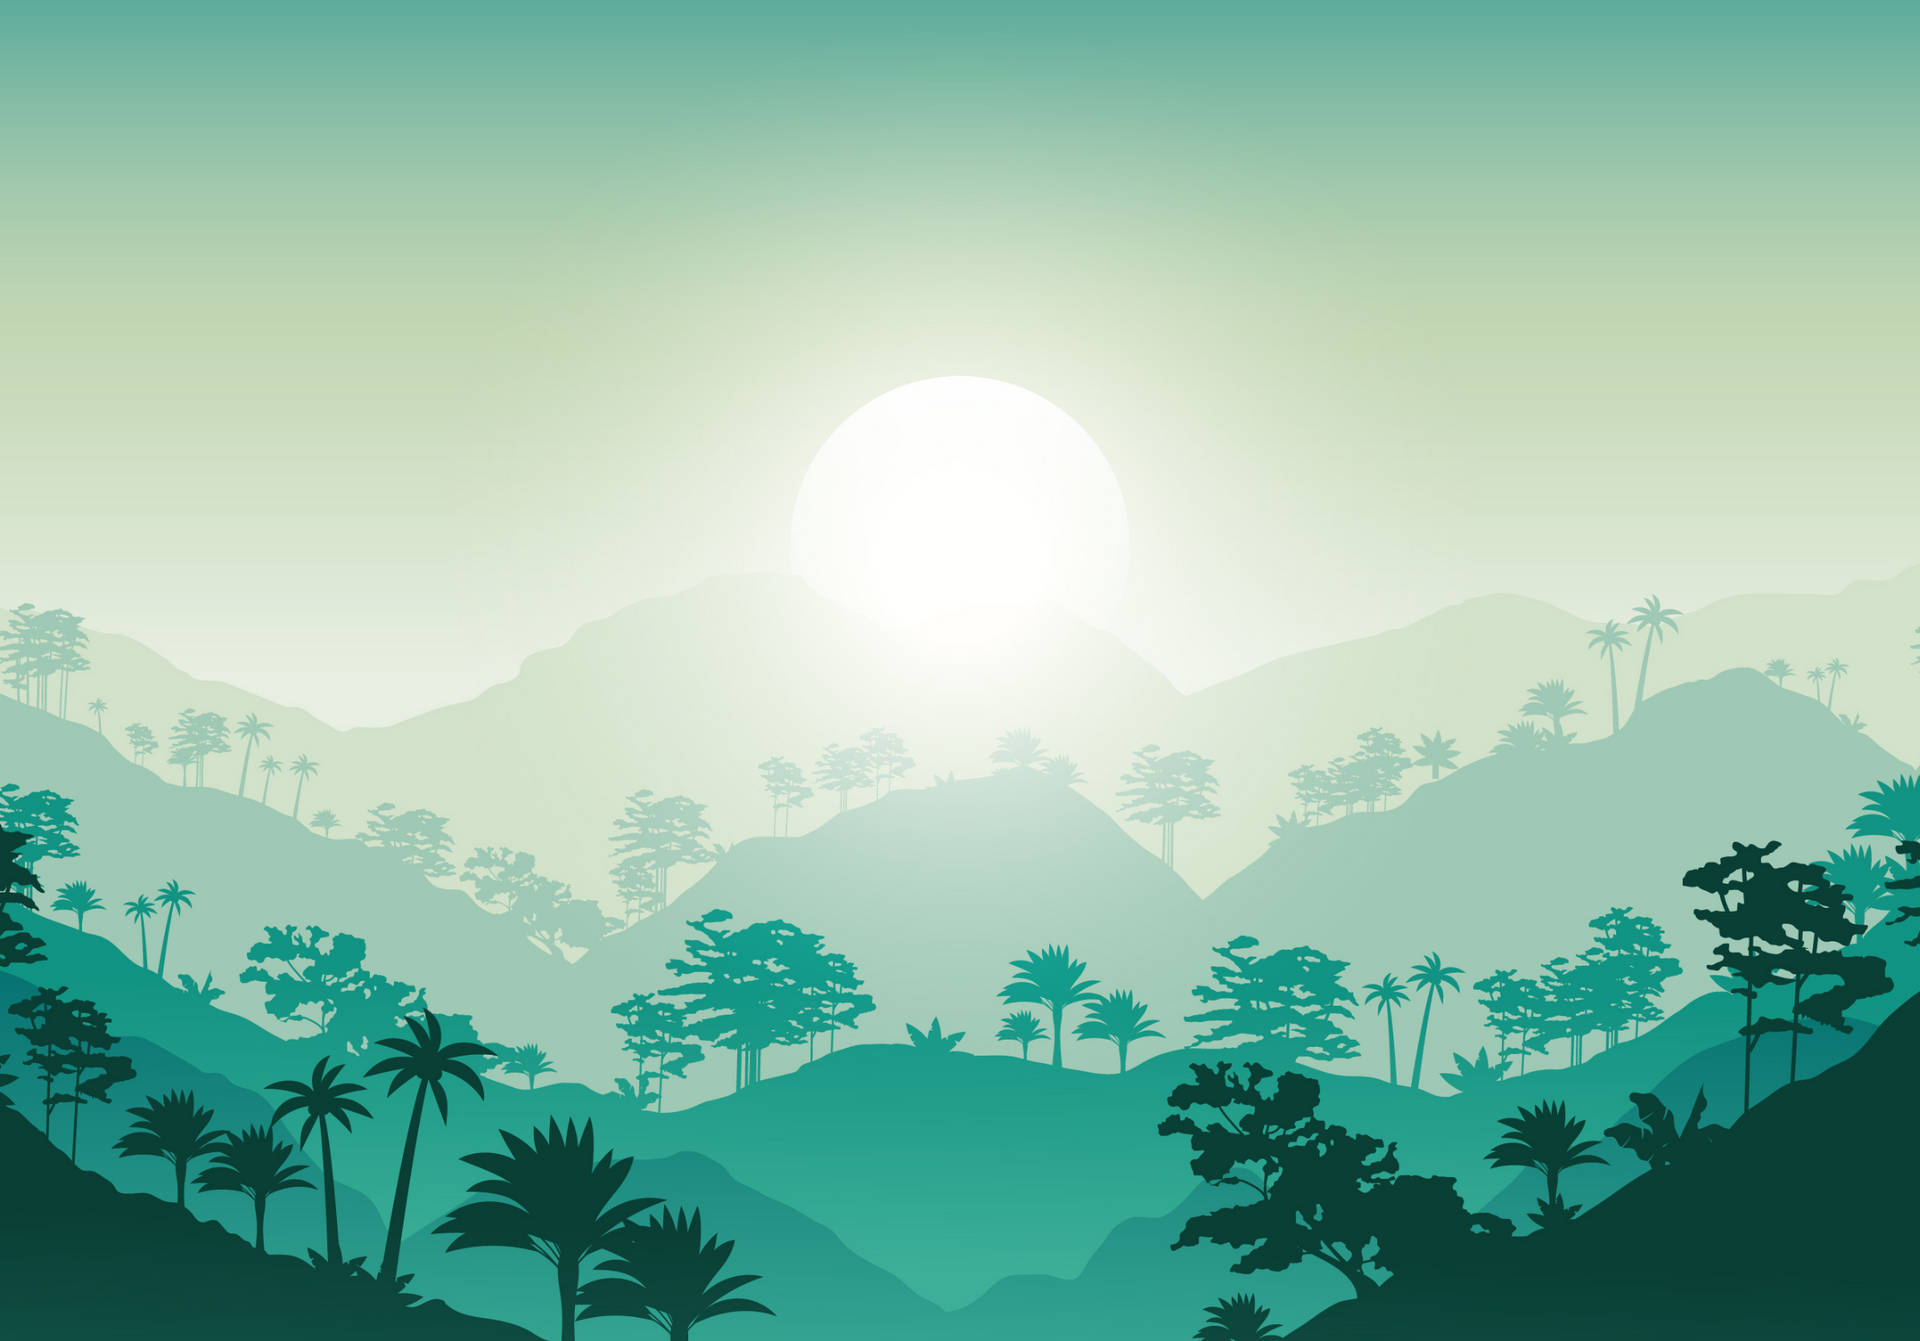 Ipad Pro 12.9 Turquoise Mountain Landscape Wallpaper